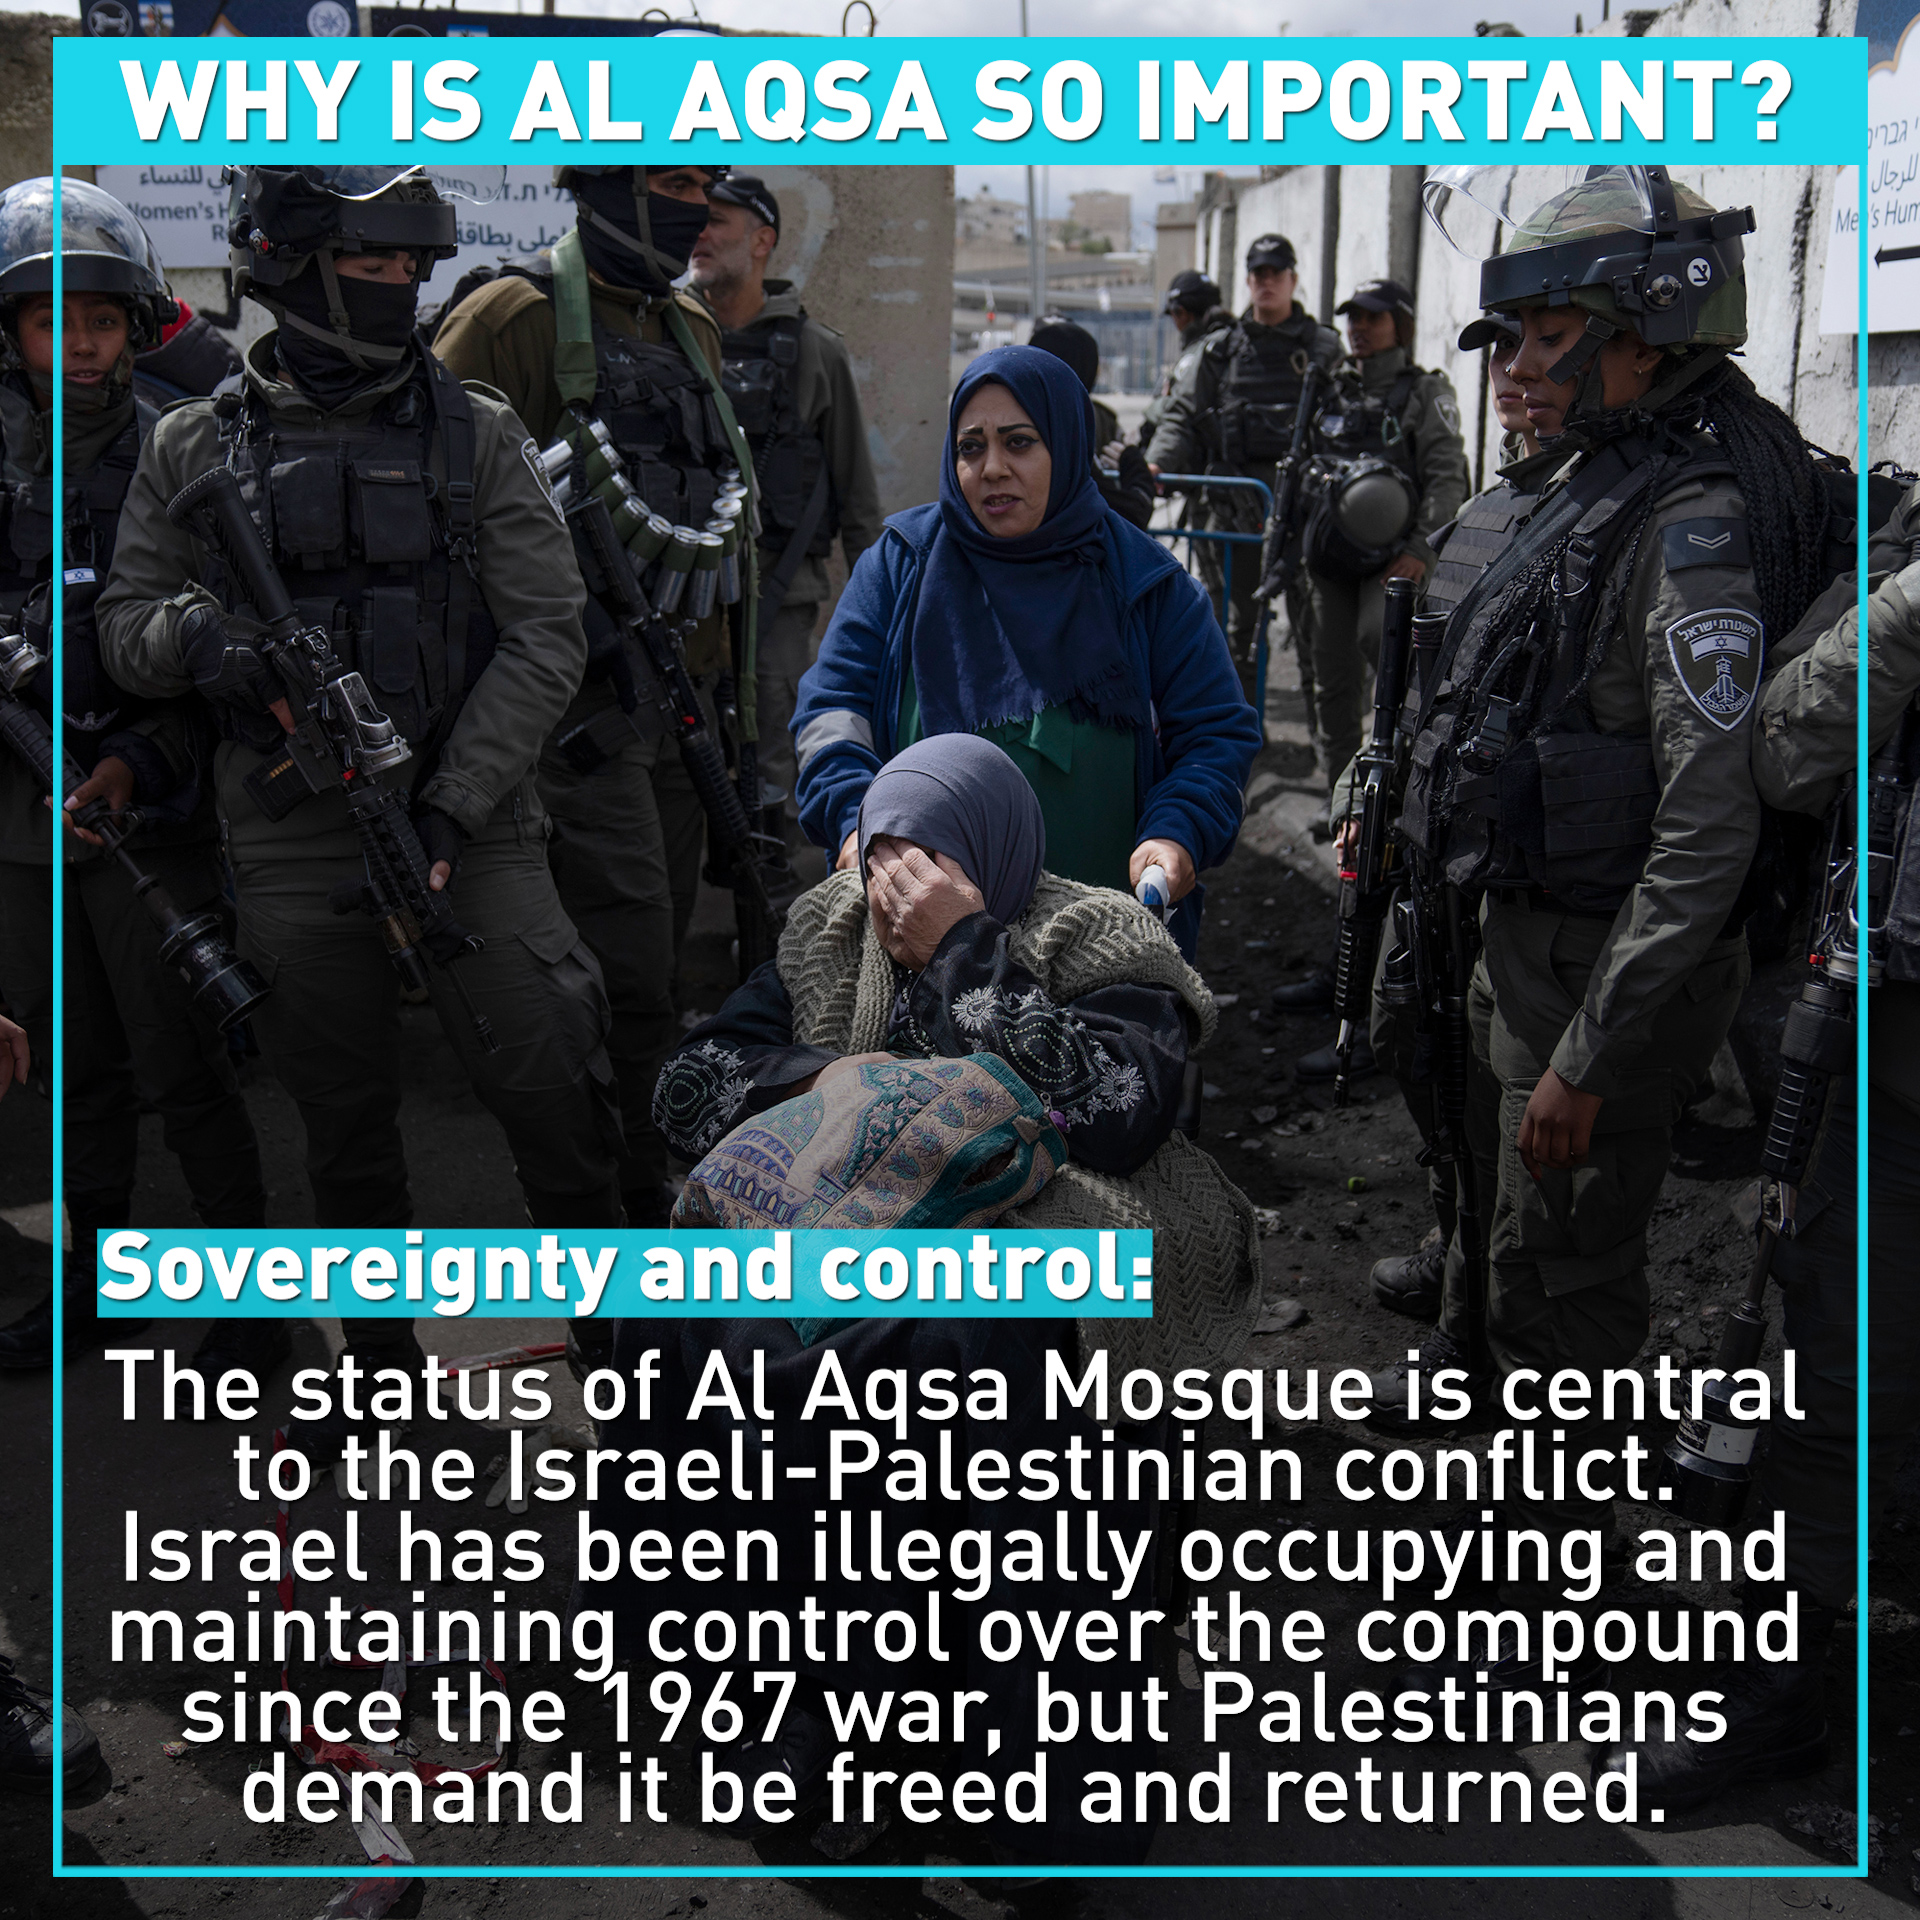 Why is Al Aqsa so important?